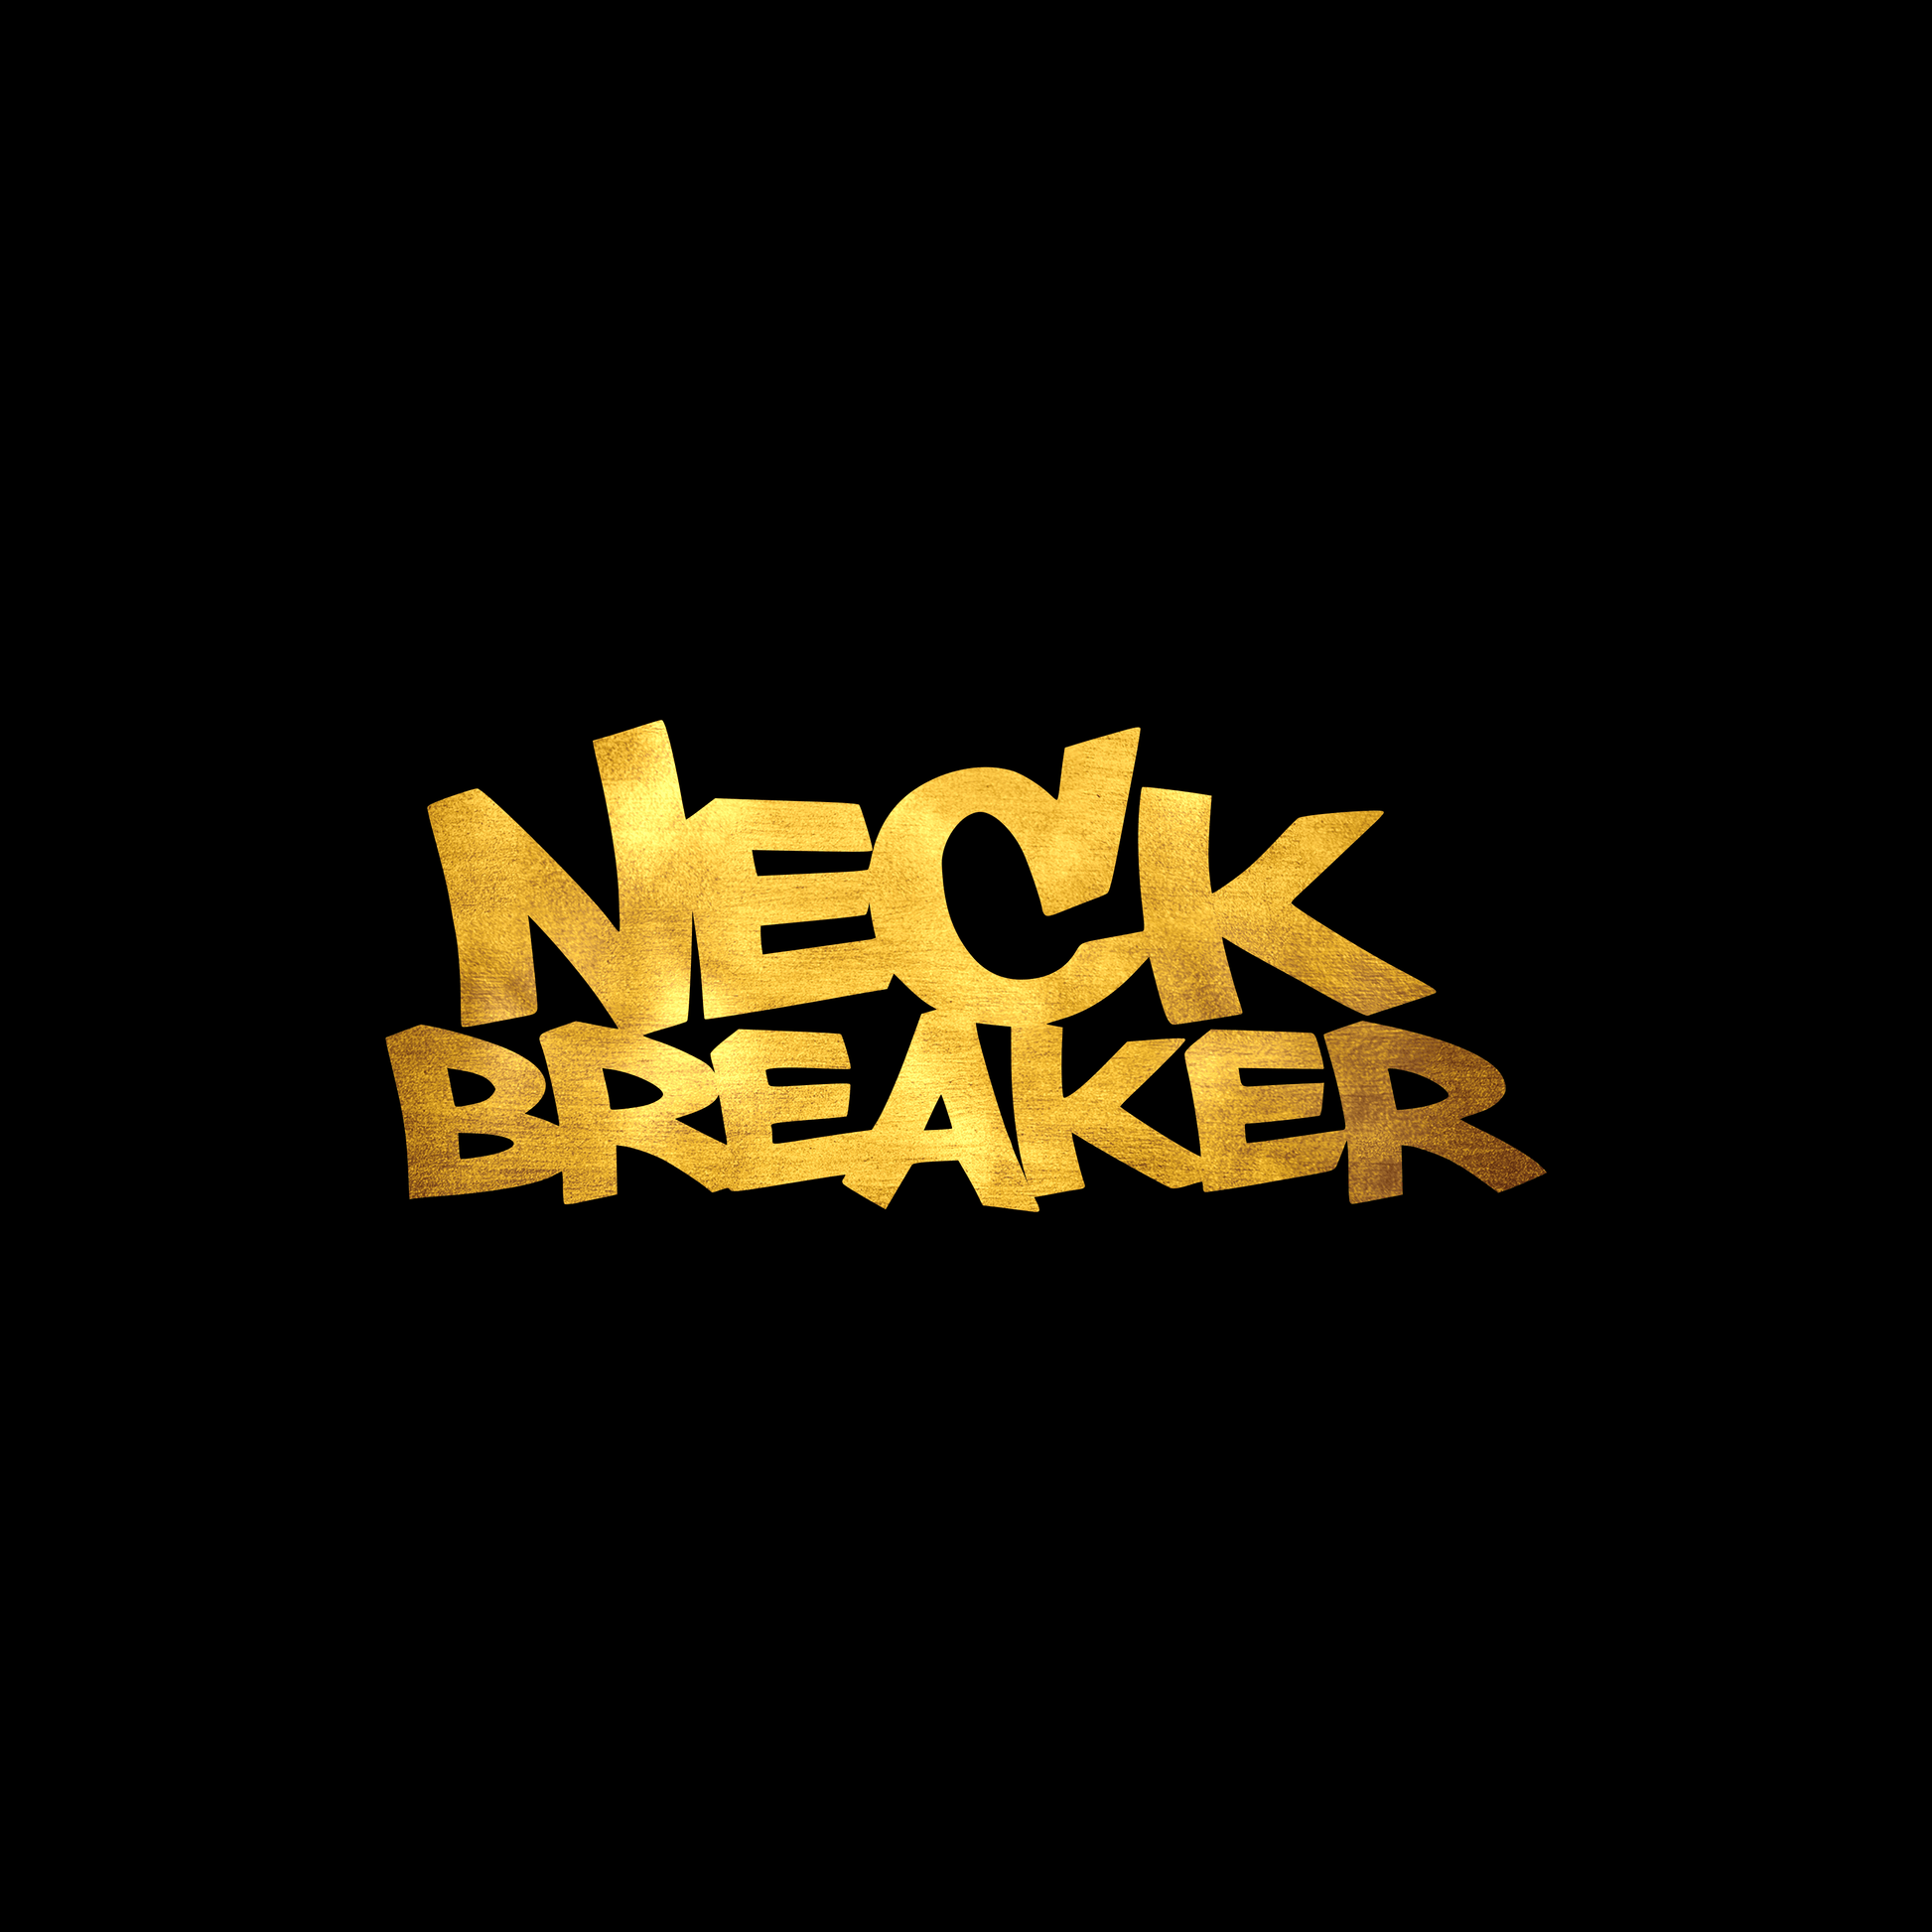 Neck breaker sticker decal